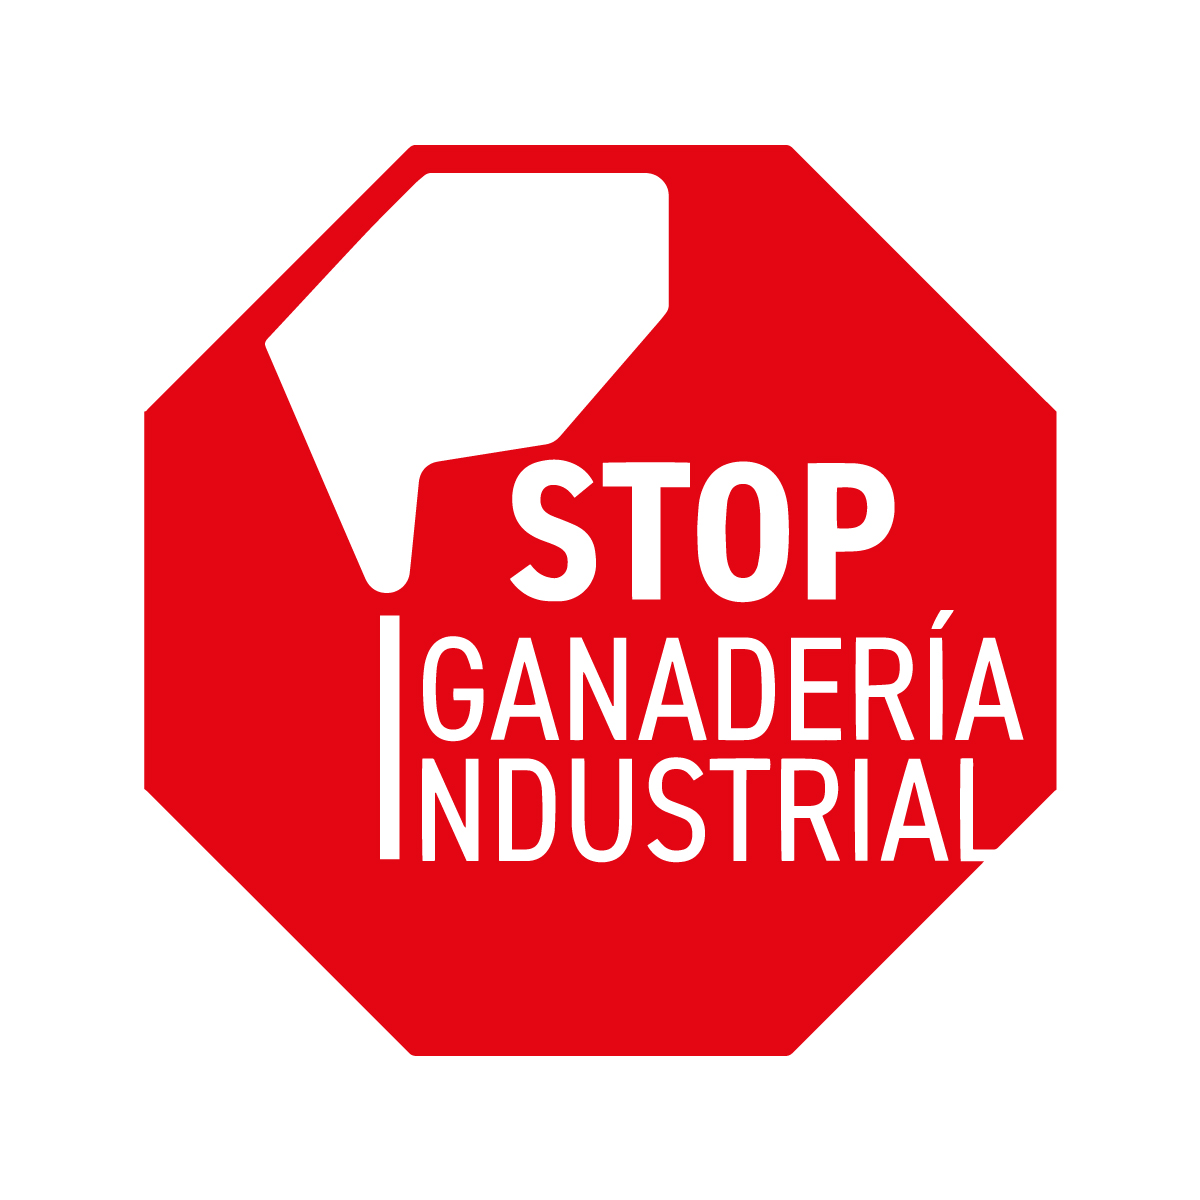 (c) Stopganaderiaindustrial.org